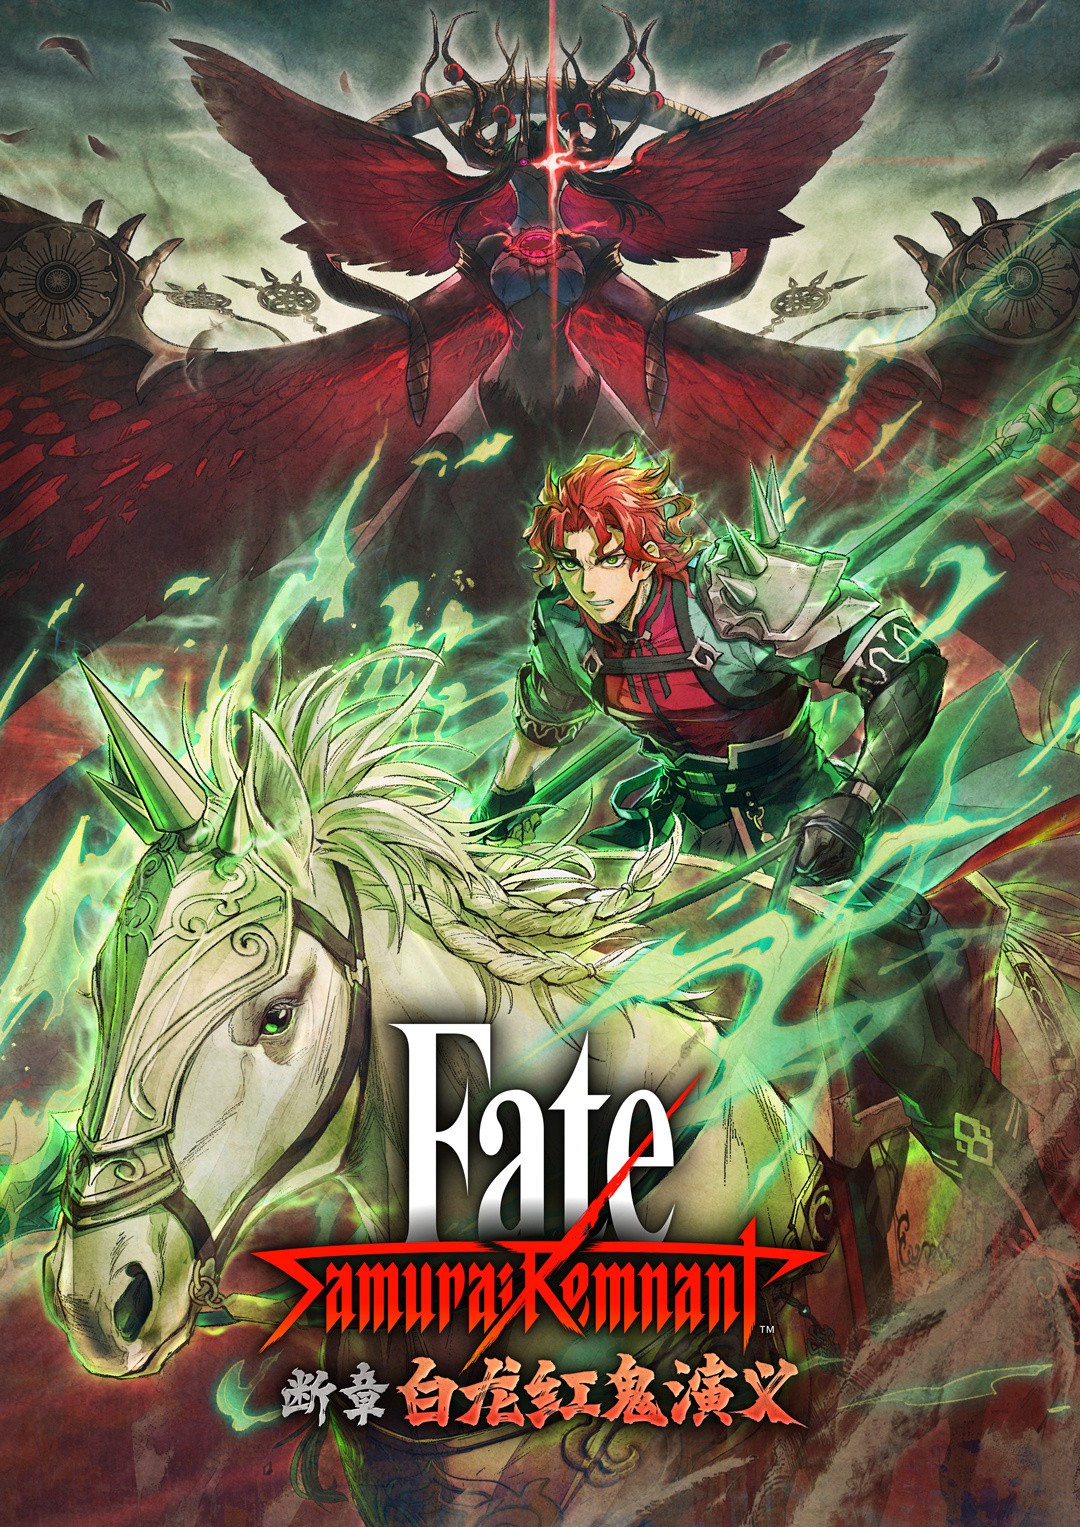 《Fate/Samurai Remnant》DLC第三弹“断章・白龙红鬼演义”公布 6月20日上线